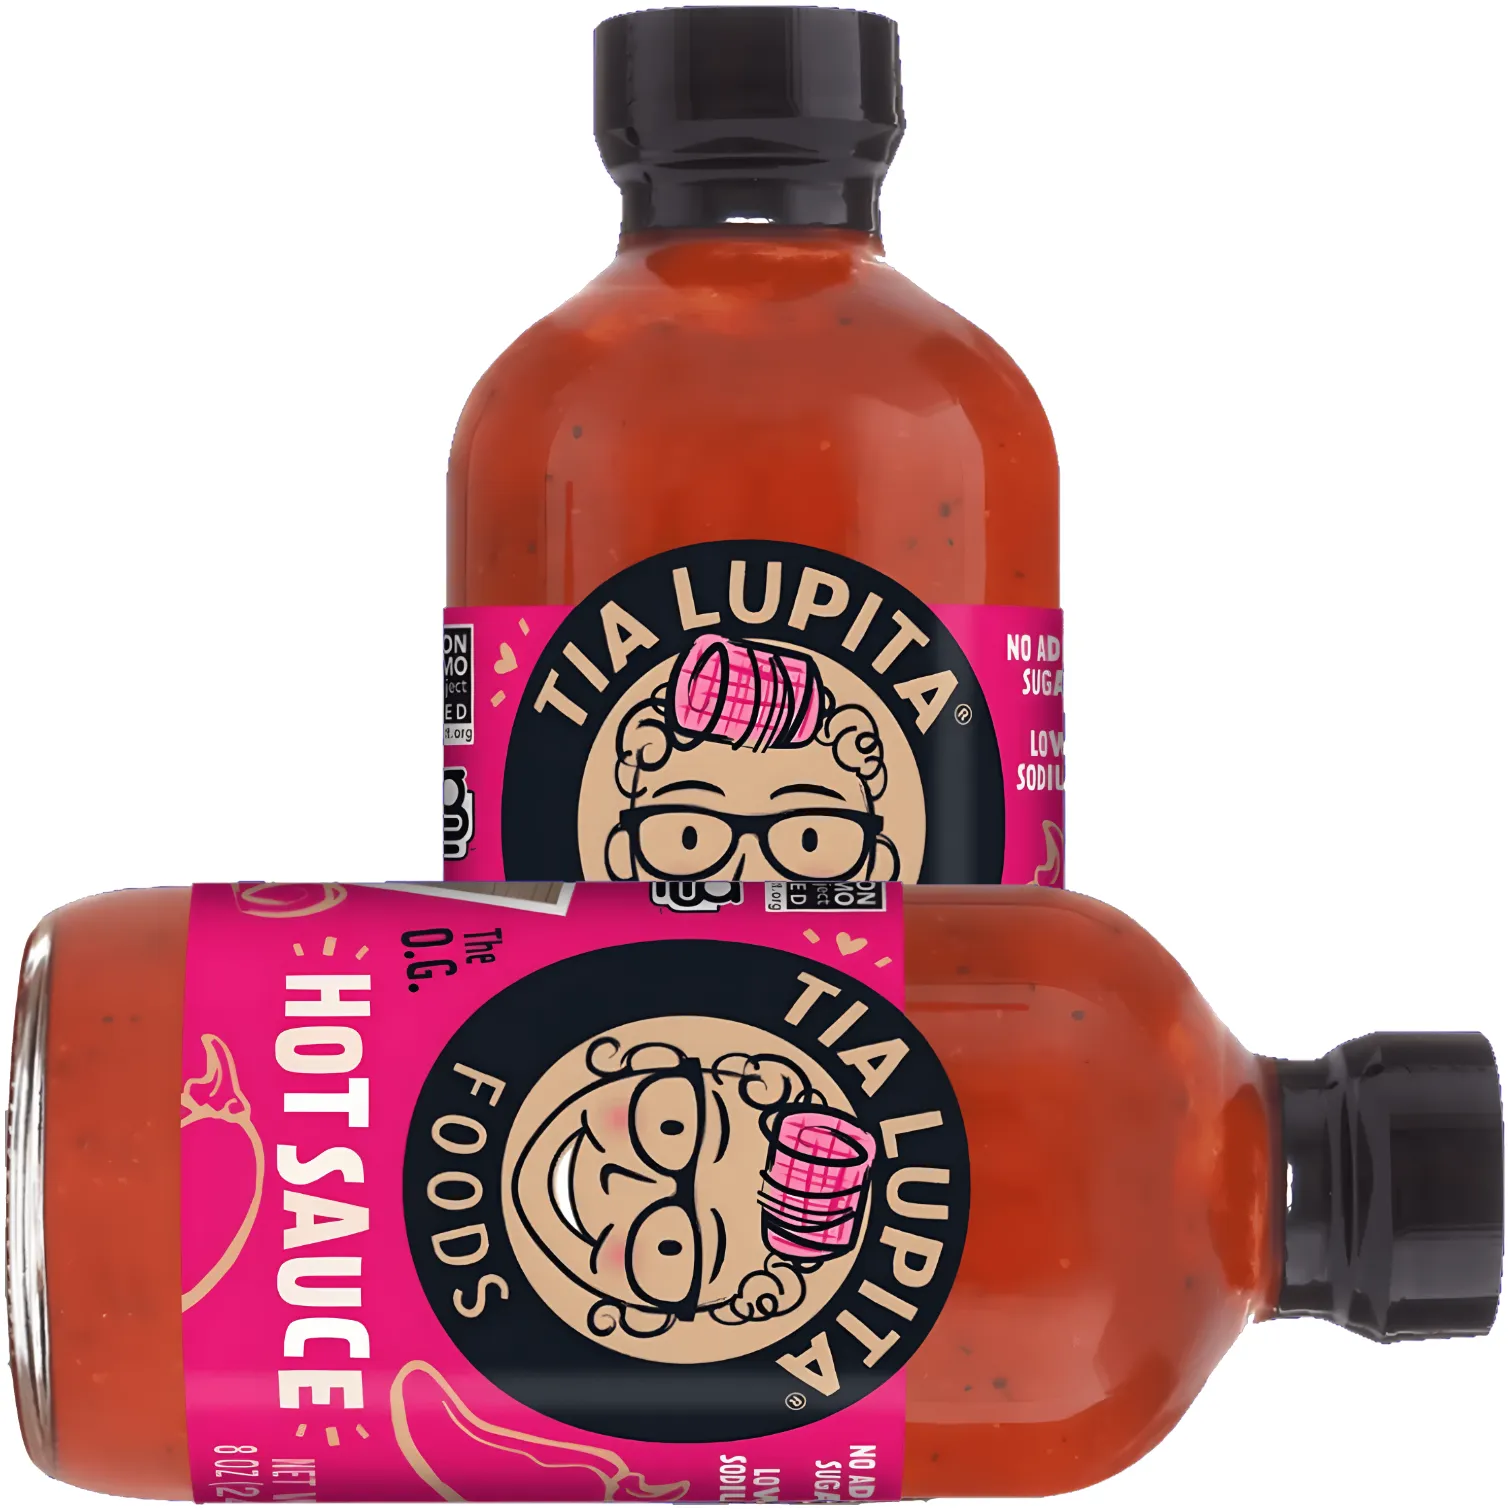 Free Tia Lupita Low Sodium Hot Sauce